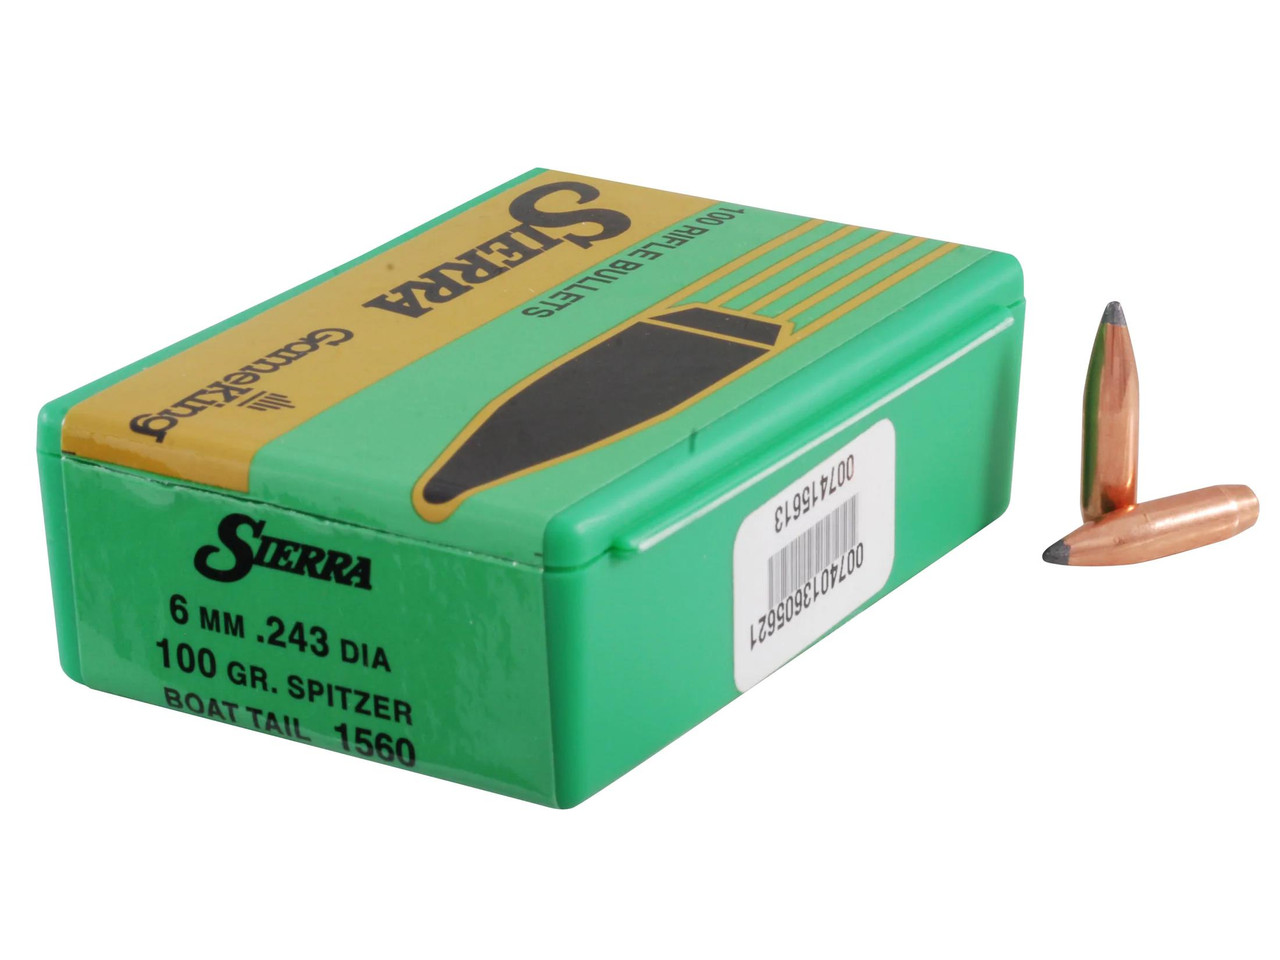 Sierra GameKing Bullets 243 Caliber, 6mm (243 Diameter) 100 Grain Spitzer Boat Tail Box of 100